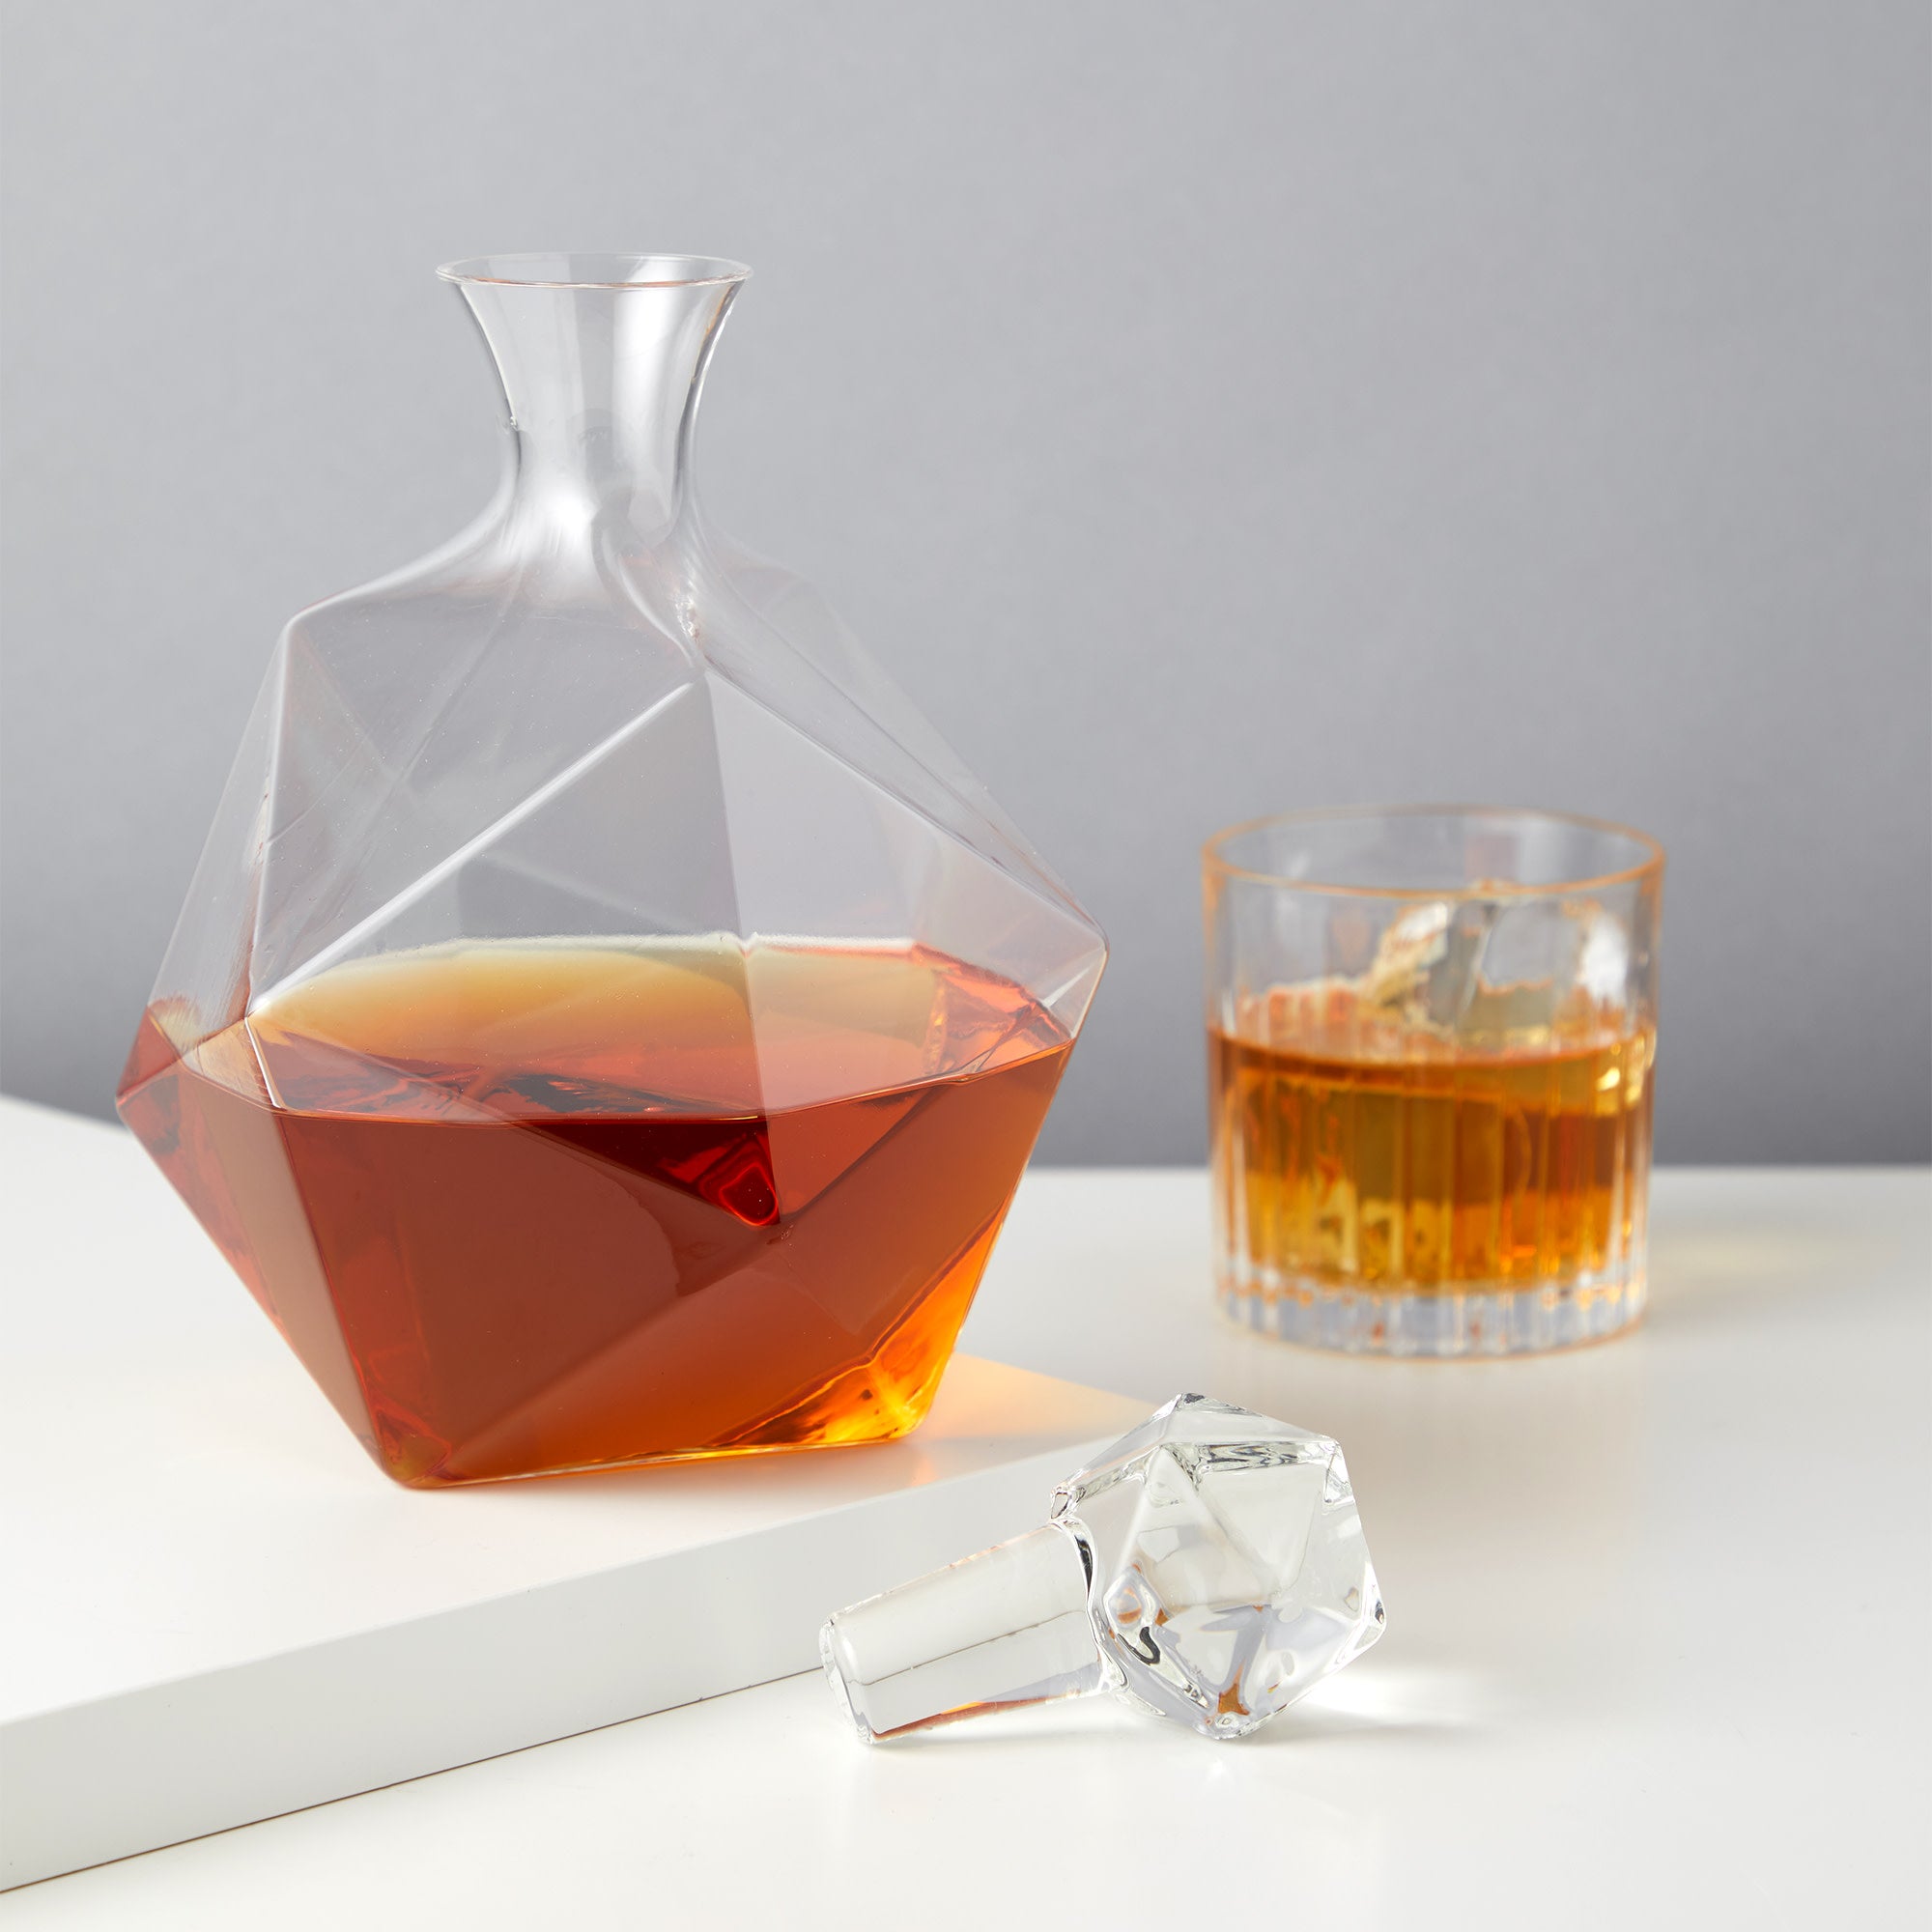 Seneca Faceted Crystal Liquor Decanter